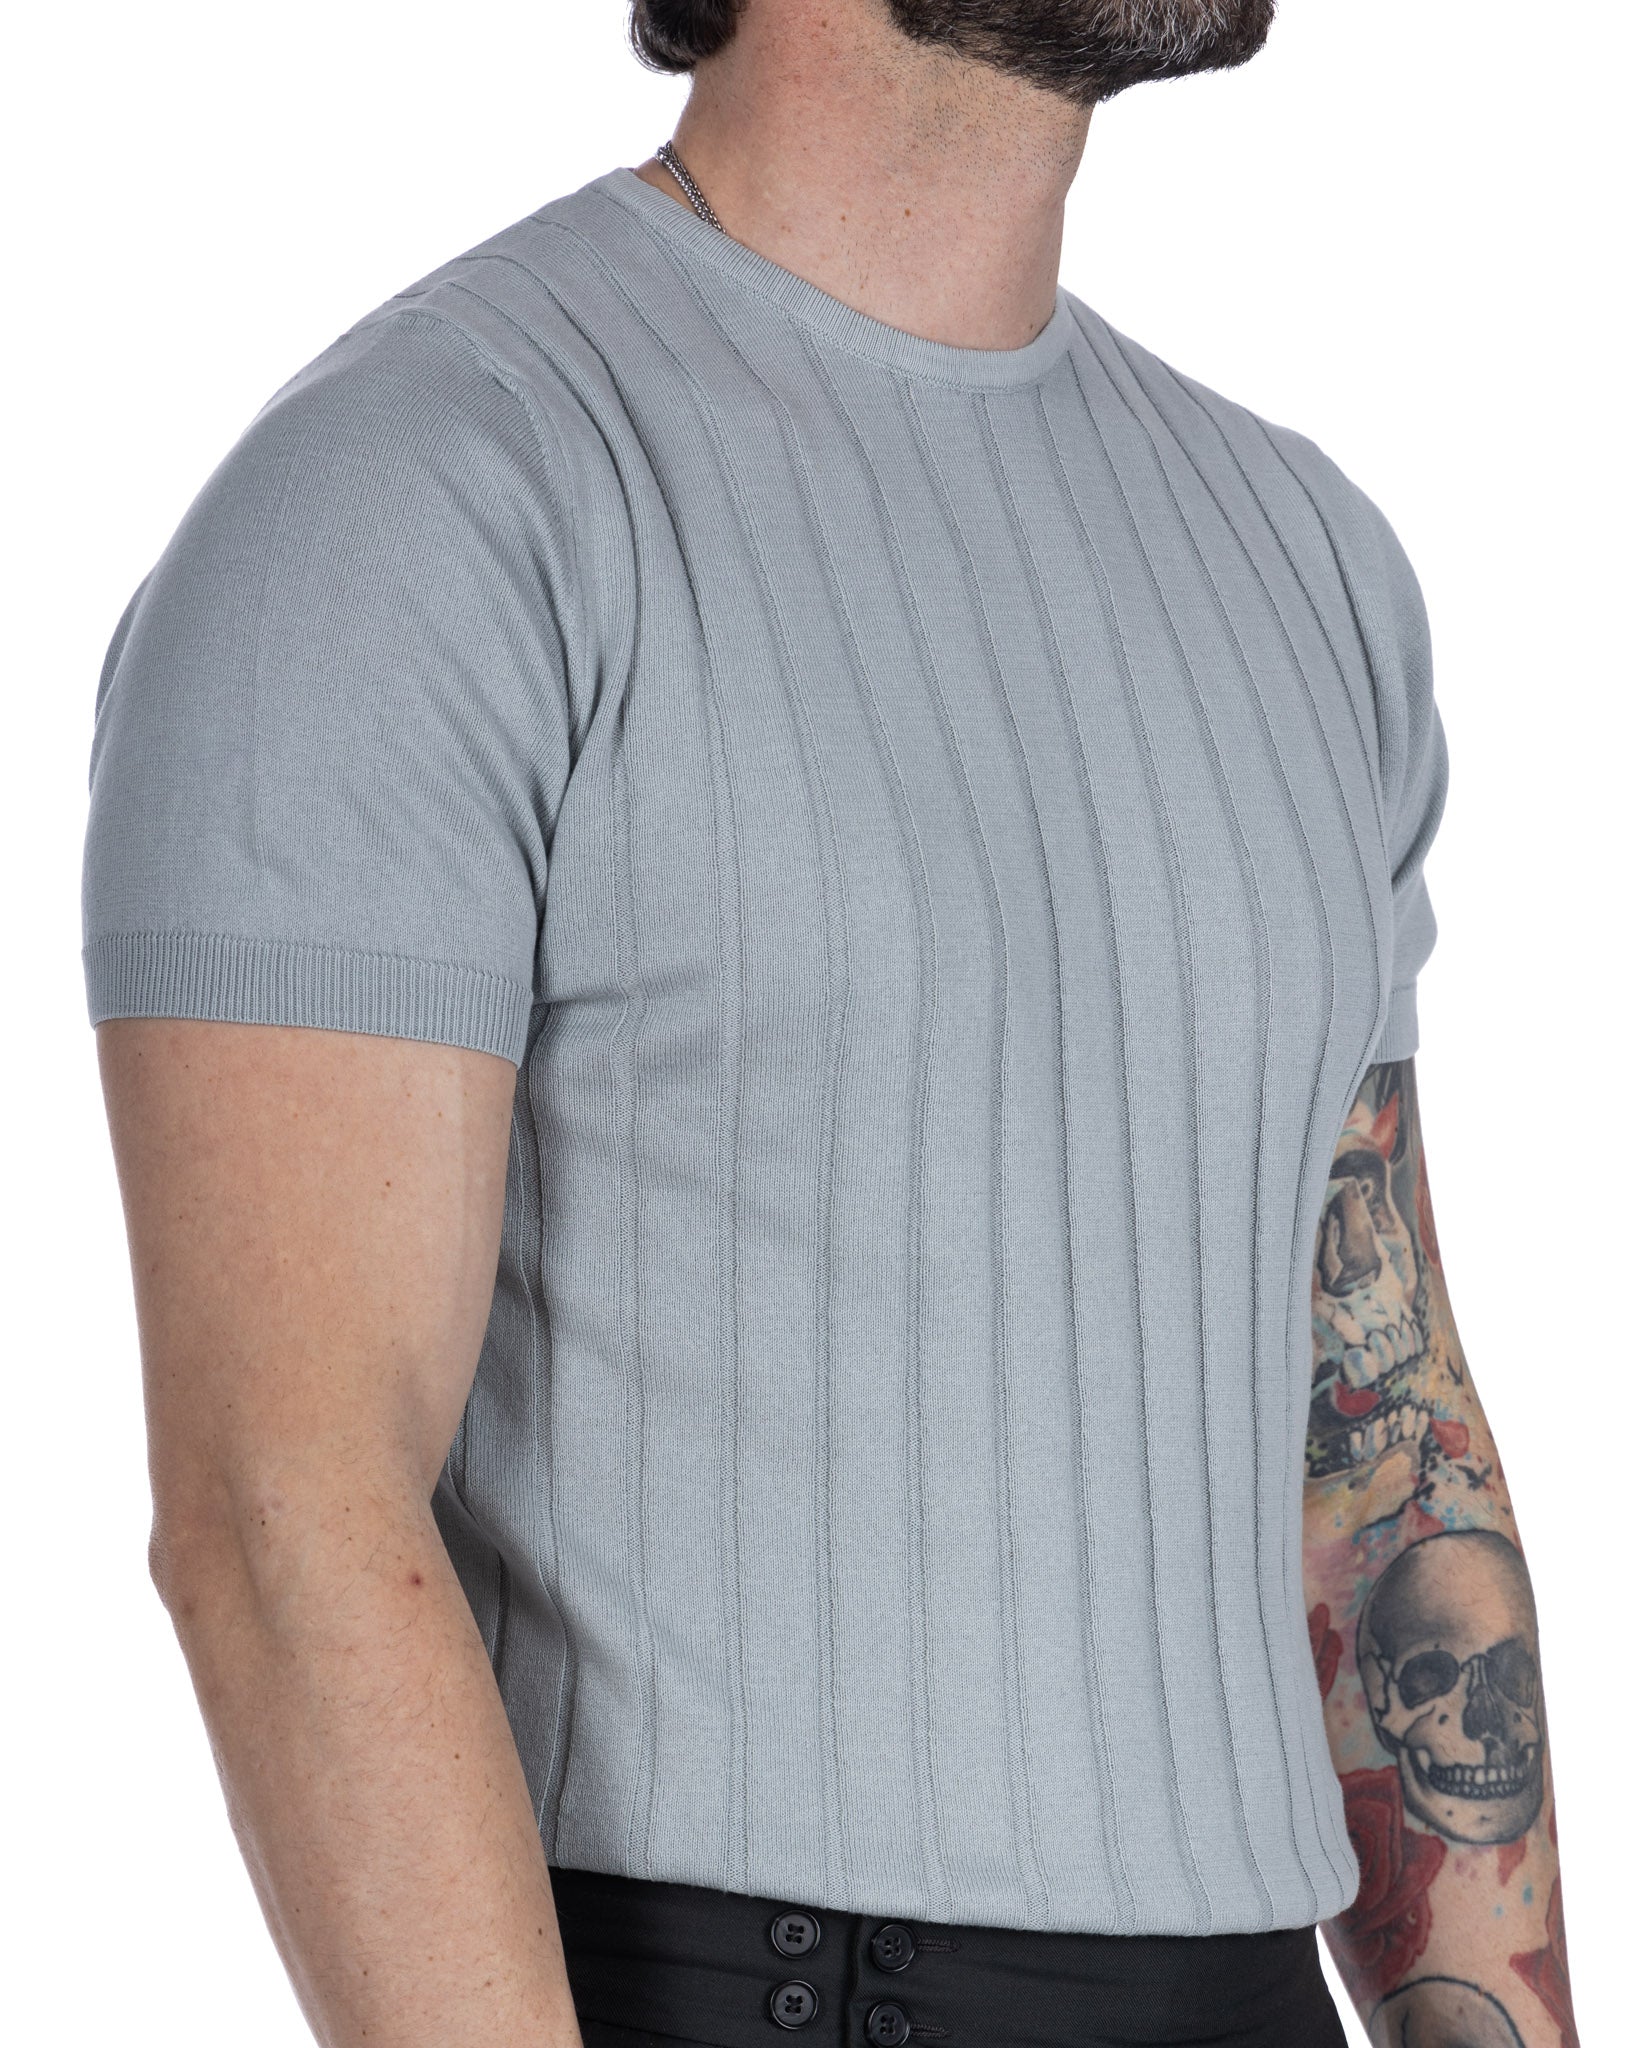 Andreas - light gray ribbed knitted t-shirt